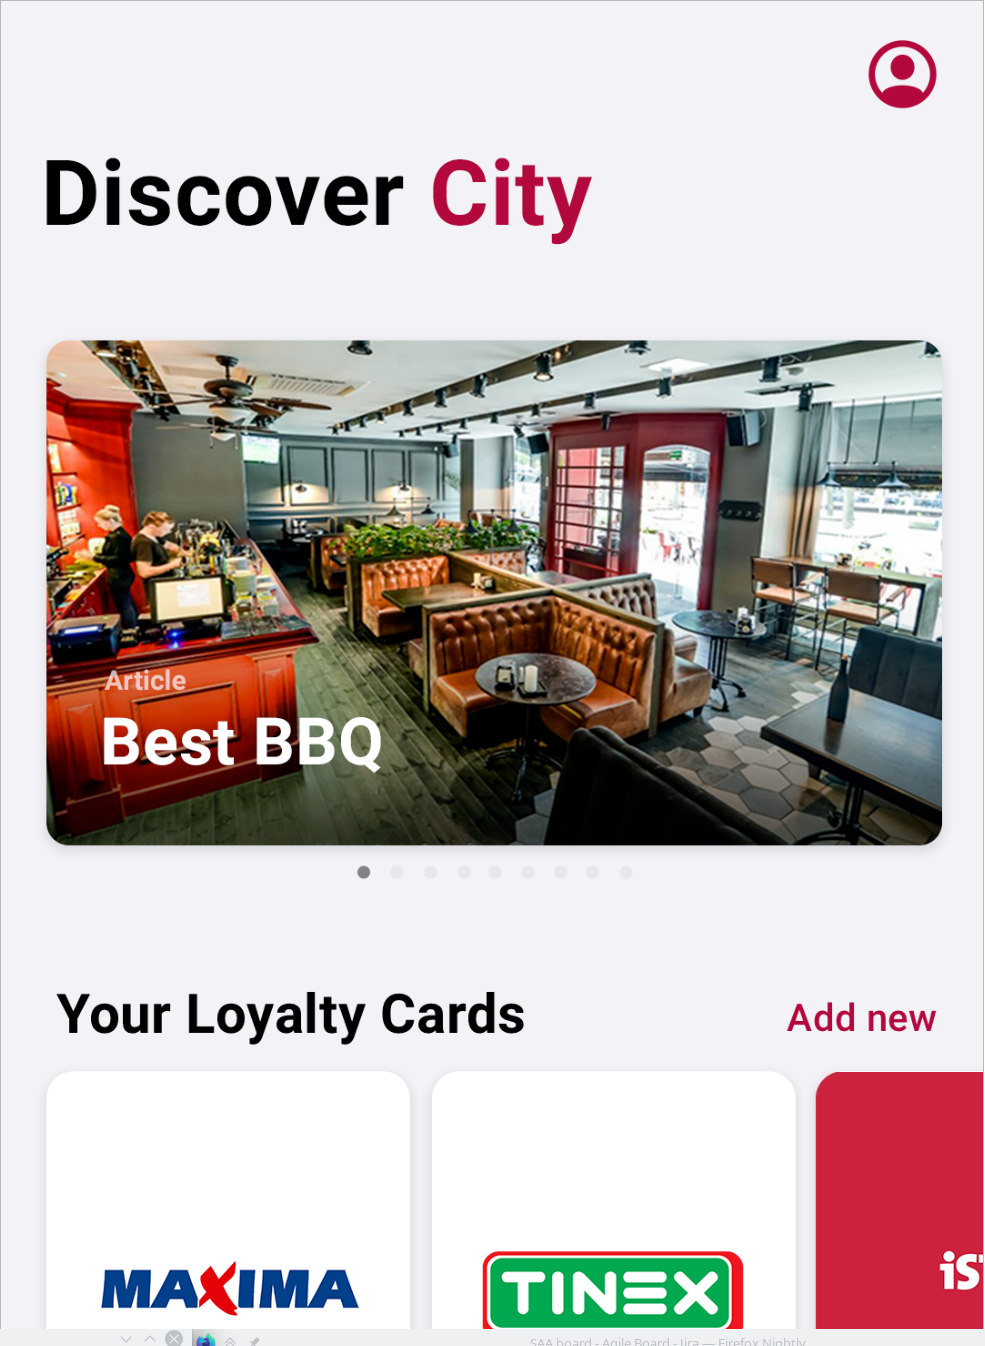 Landing screen in the Consumer mobile app